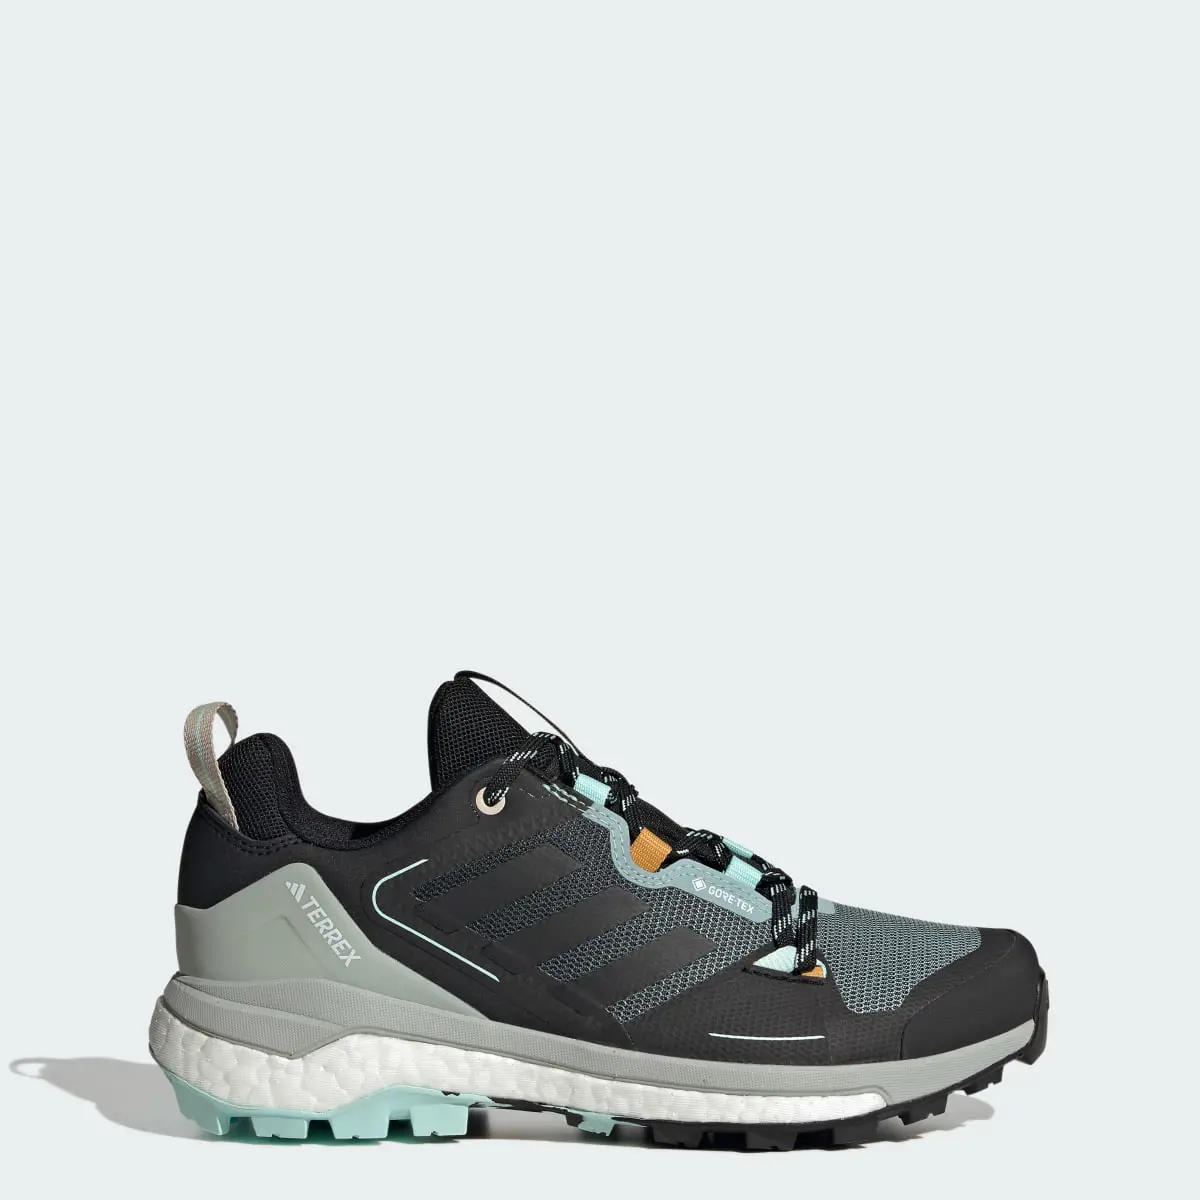 Adidas Sapatilhas de Caminhada GORE-TEX Skychaser 2.0 TERREX. 1